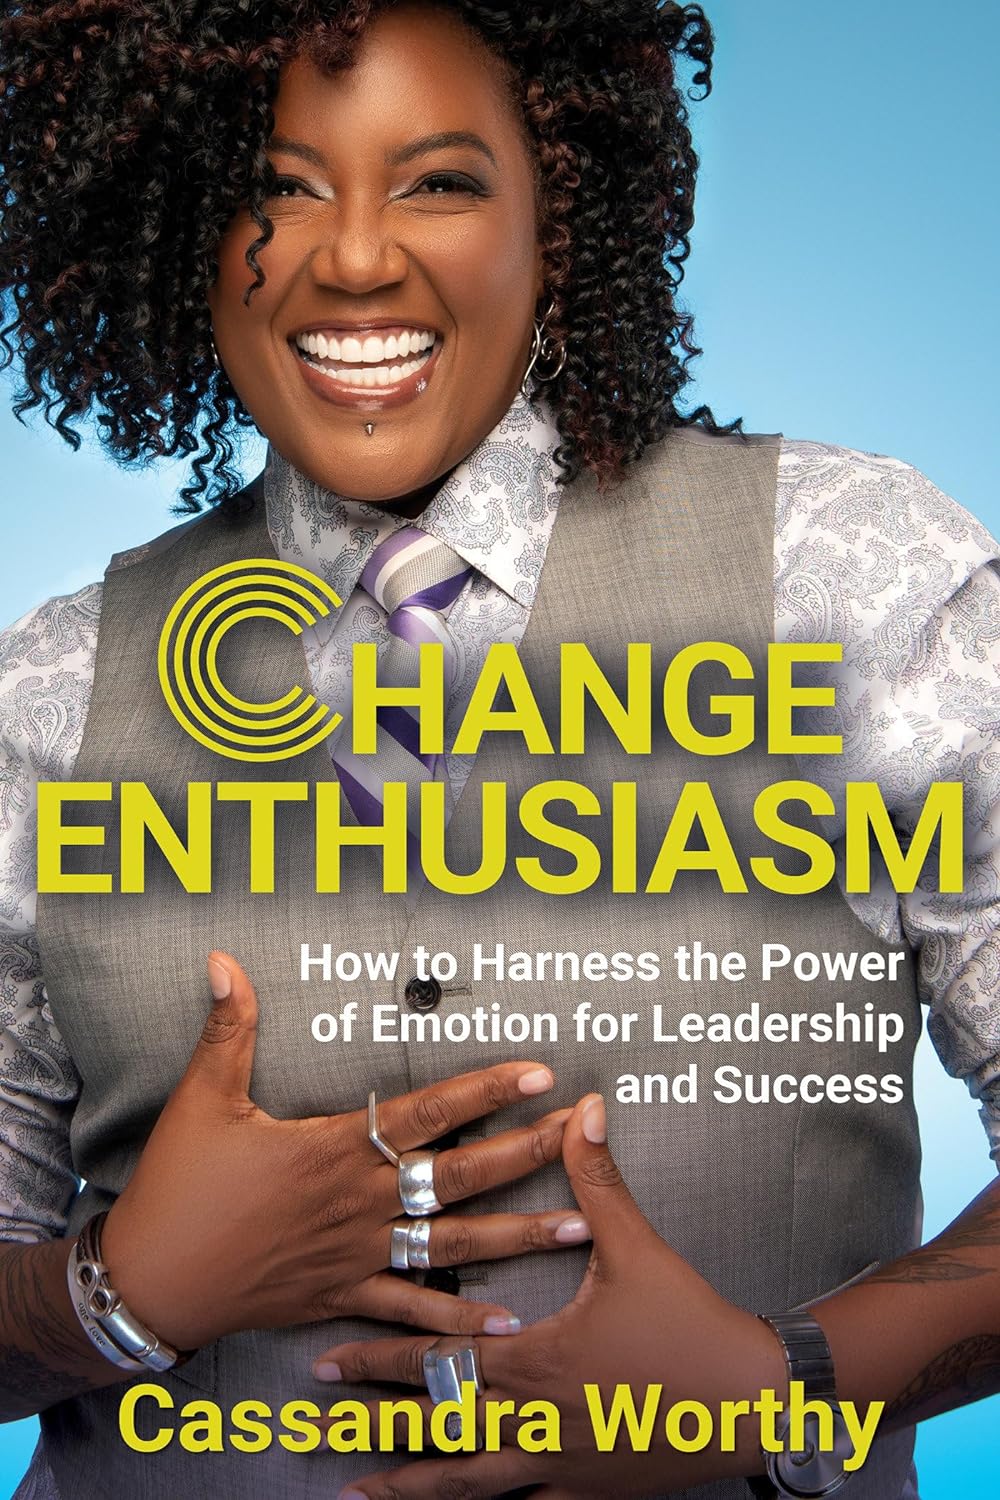 https://www.amazon.com/Change-Enthusiasm-Harness-Emotion-Leadership/dp/1401961770